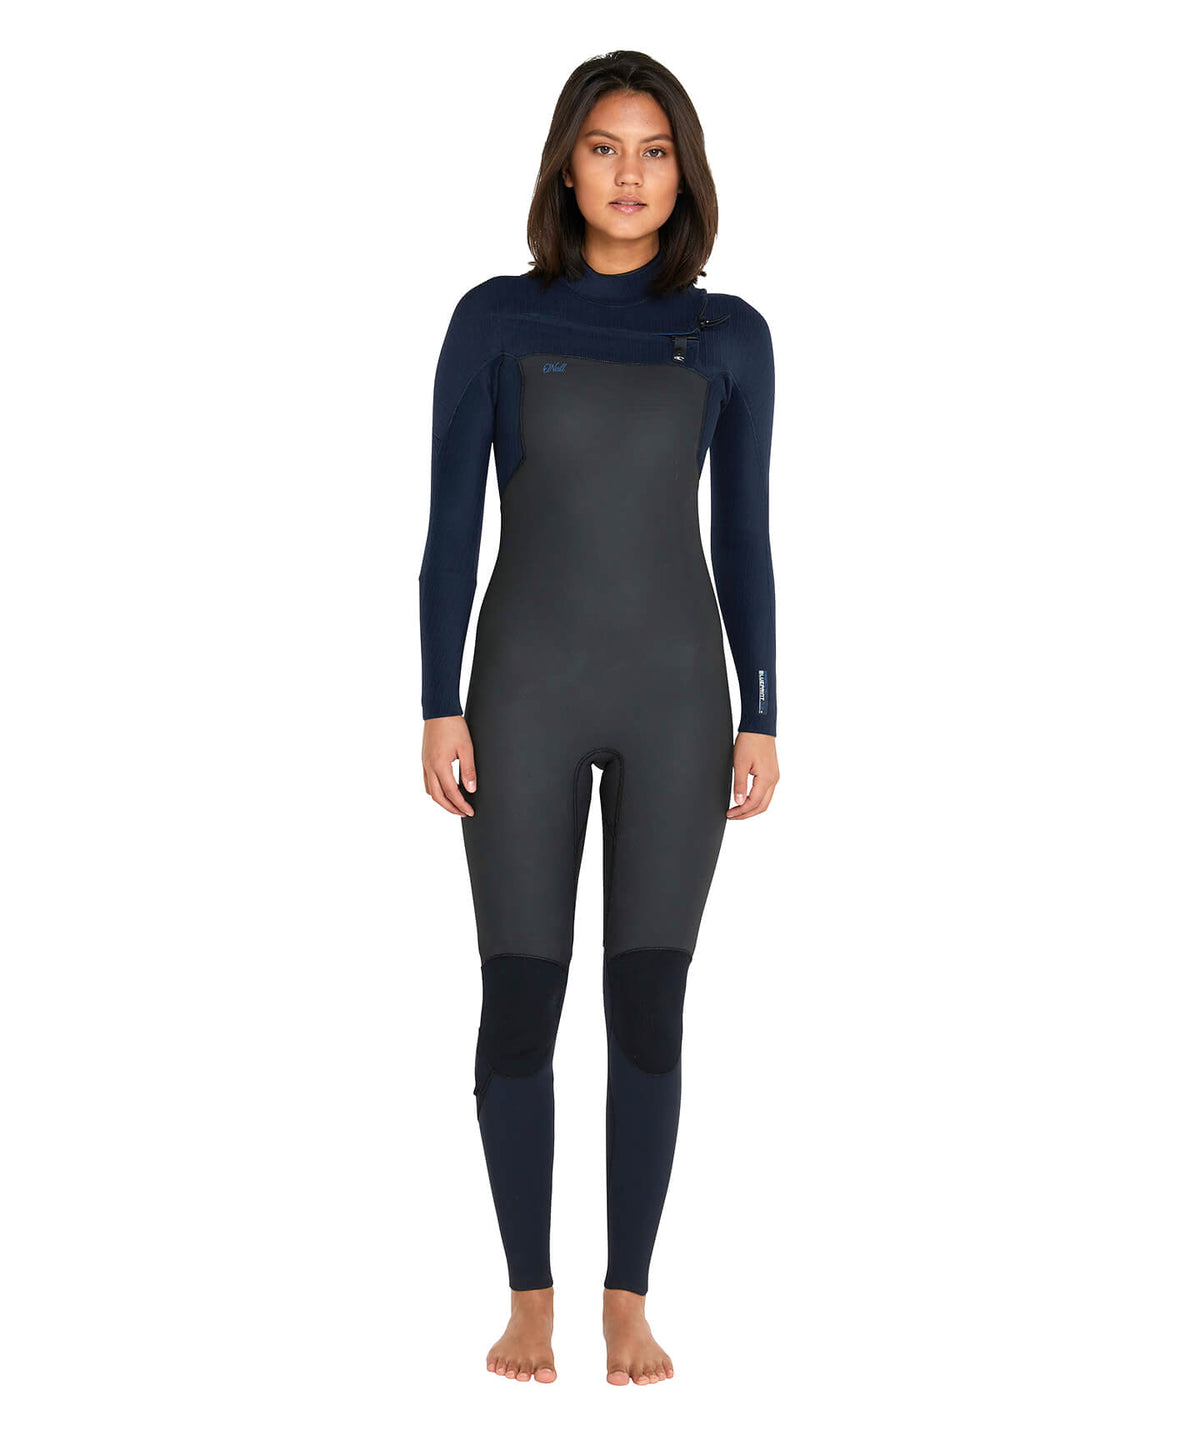 Womens Blueprint 3/2+ Steamer Chest Zip Wetsuit - Black/Abyss